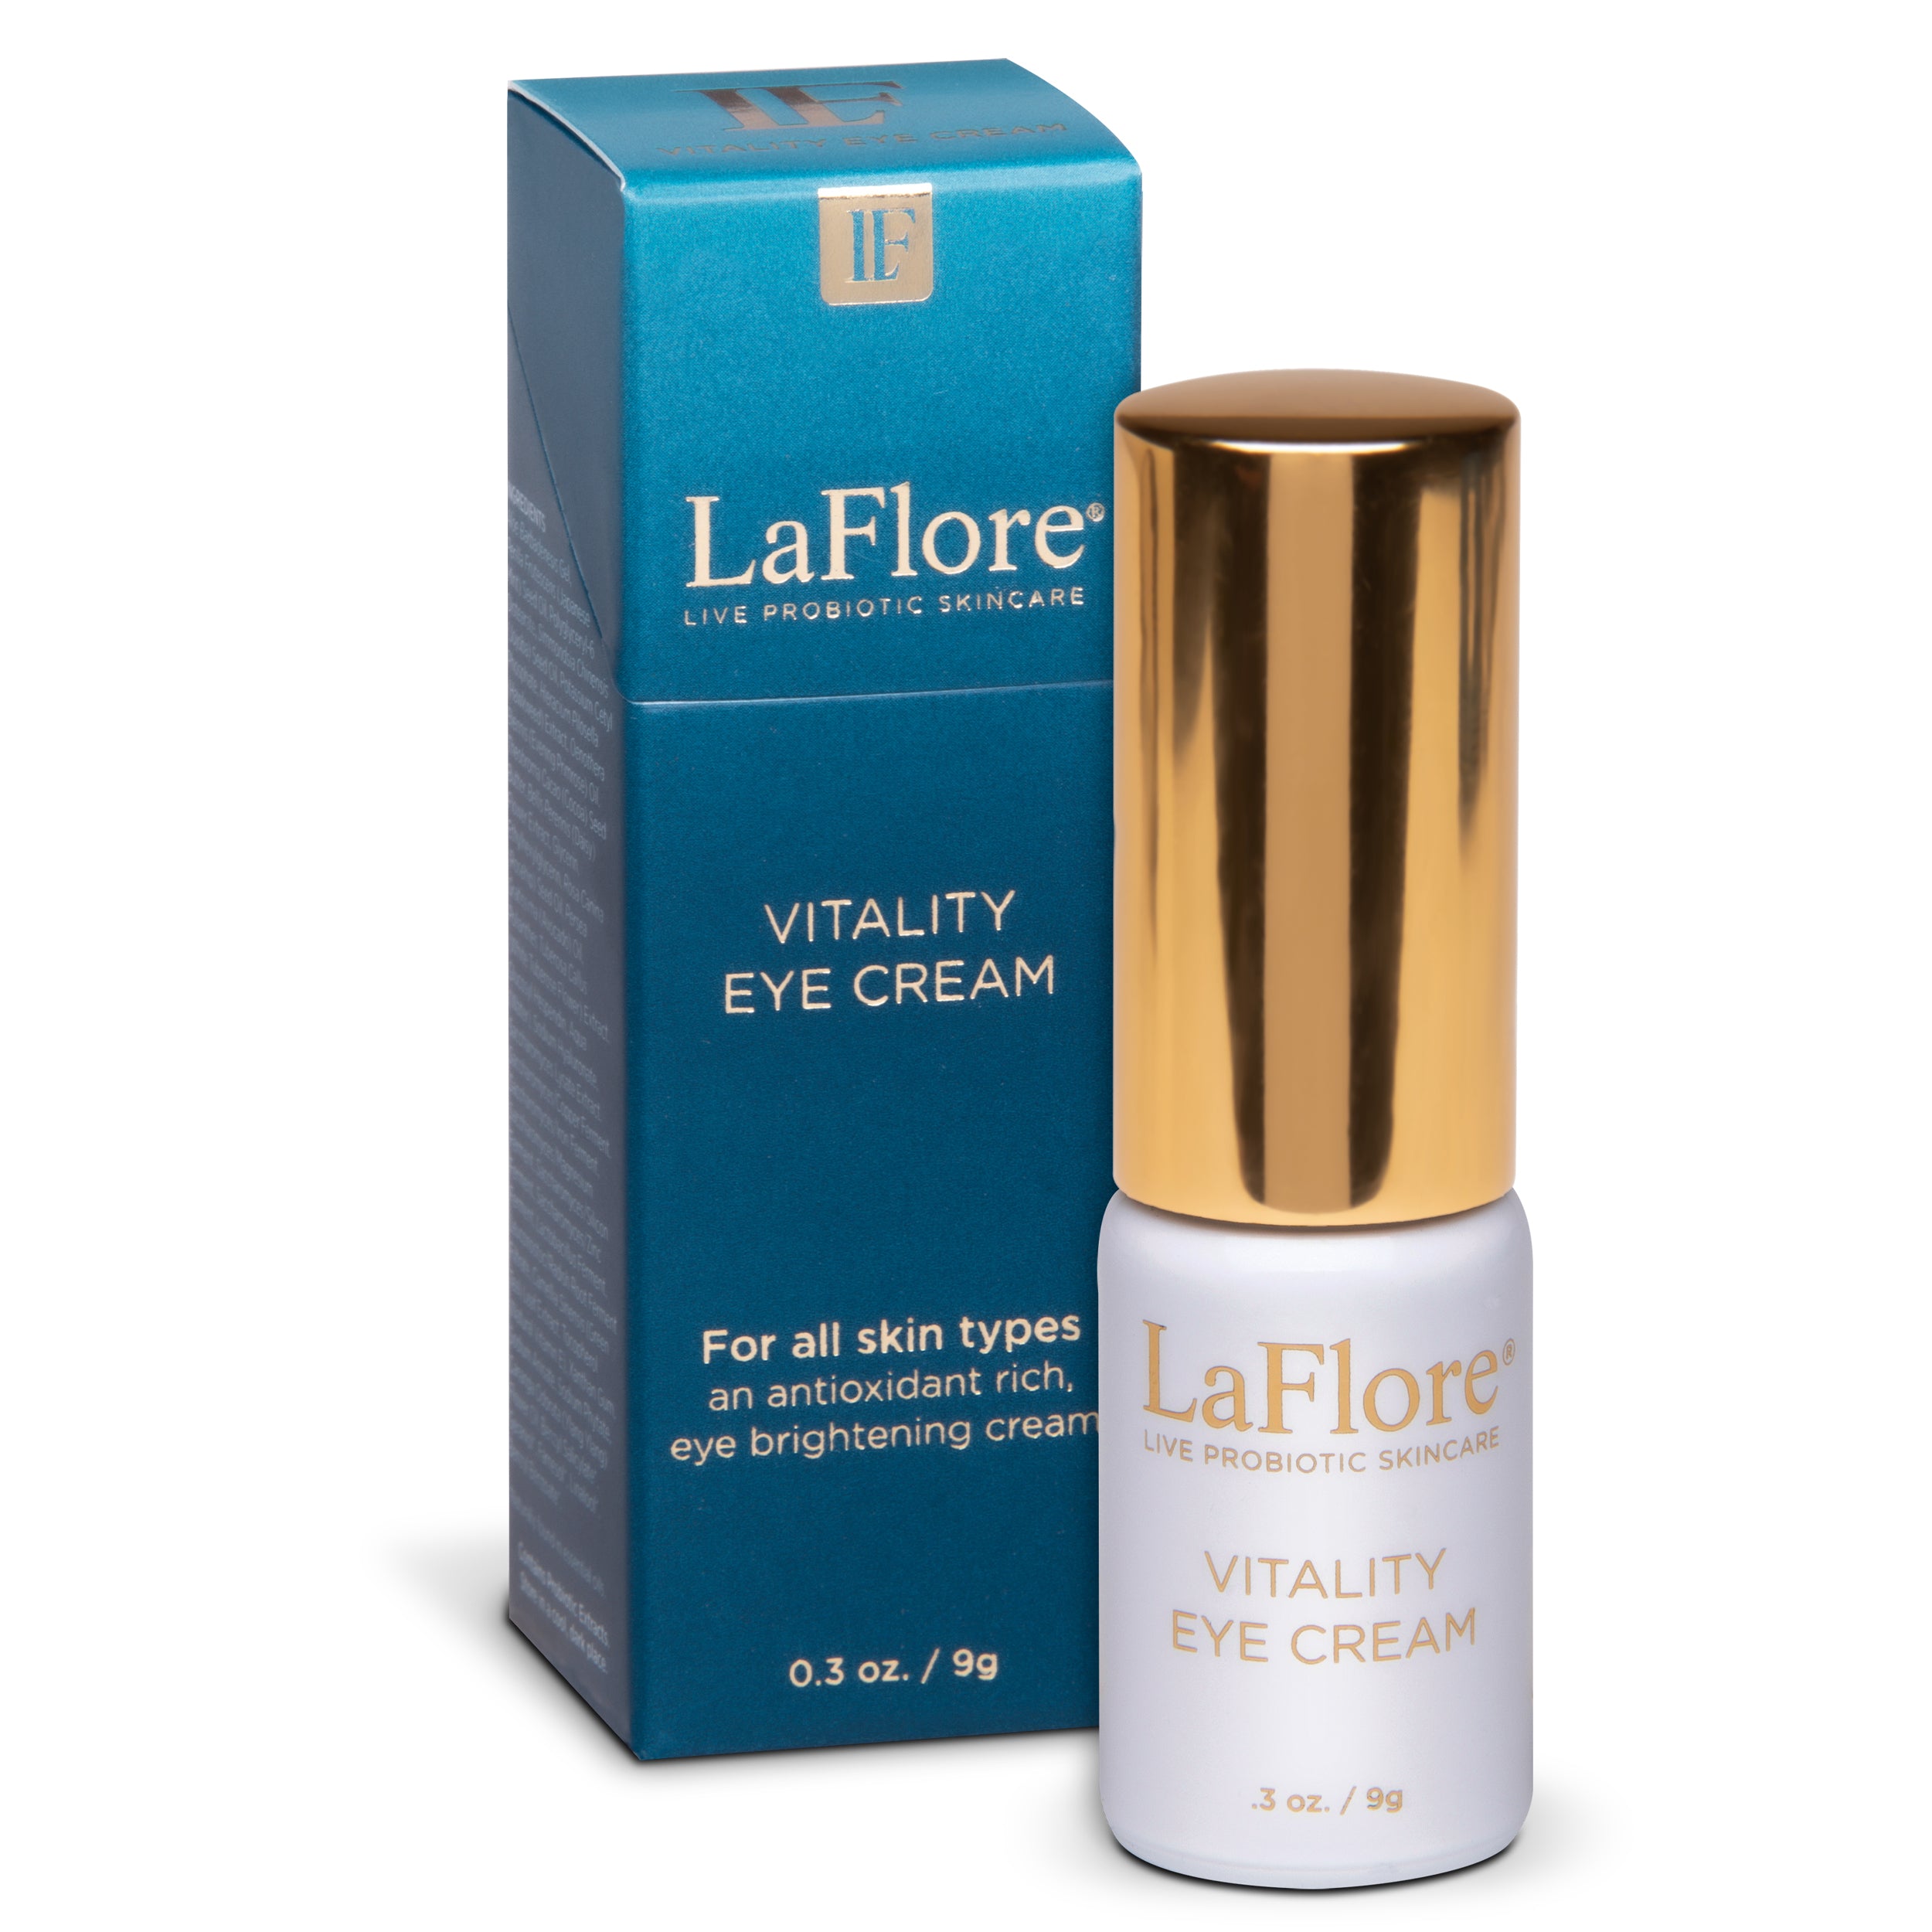 LaFlore Vitality Eye Cream - an antioxidant rich eye brightening cream